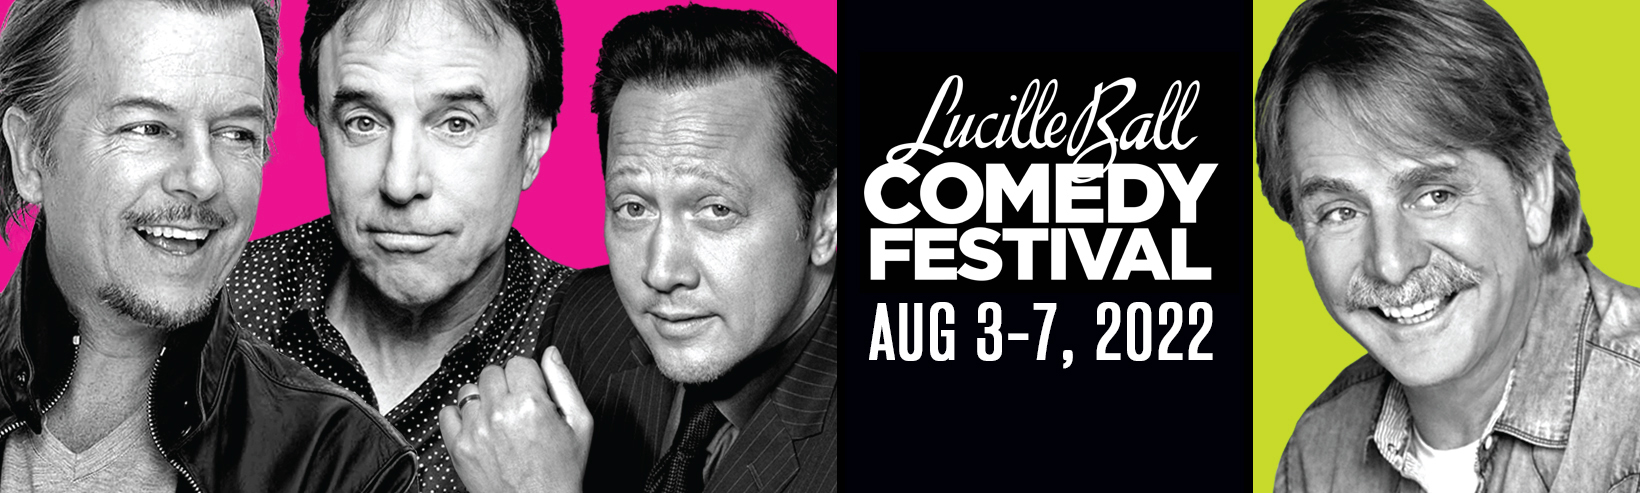 Lucille Ball Comedy Festival 2022